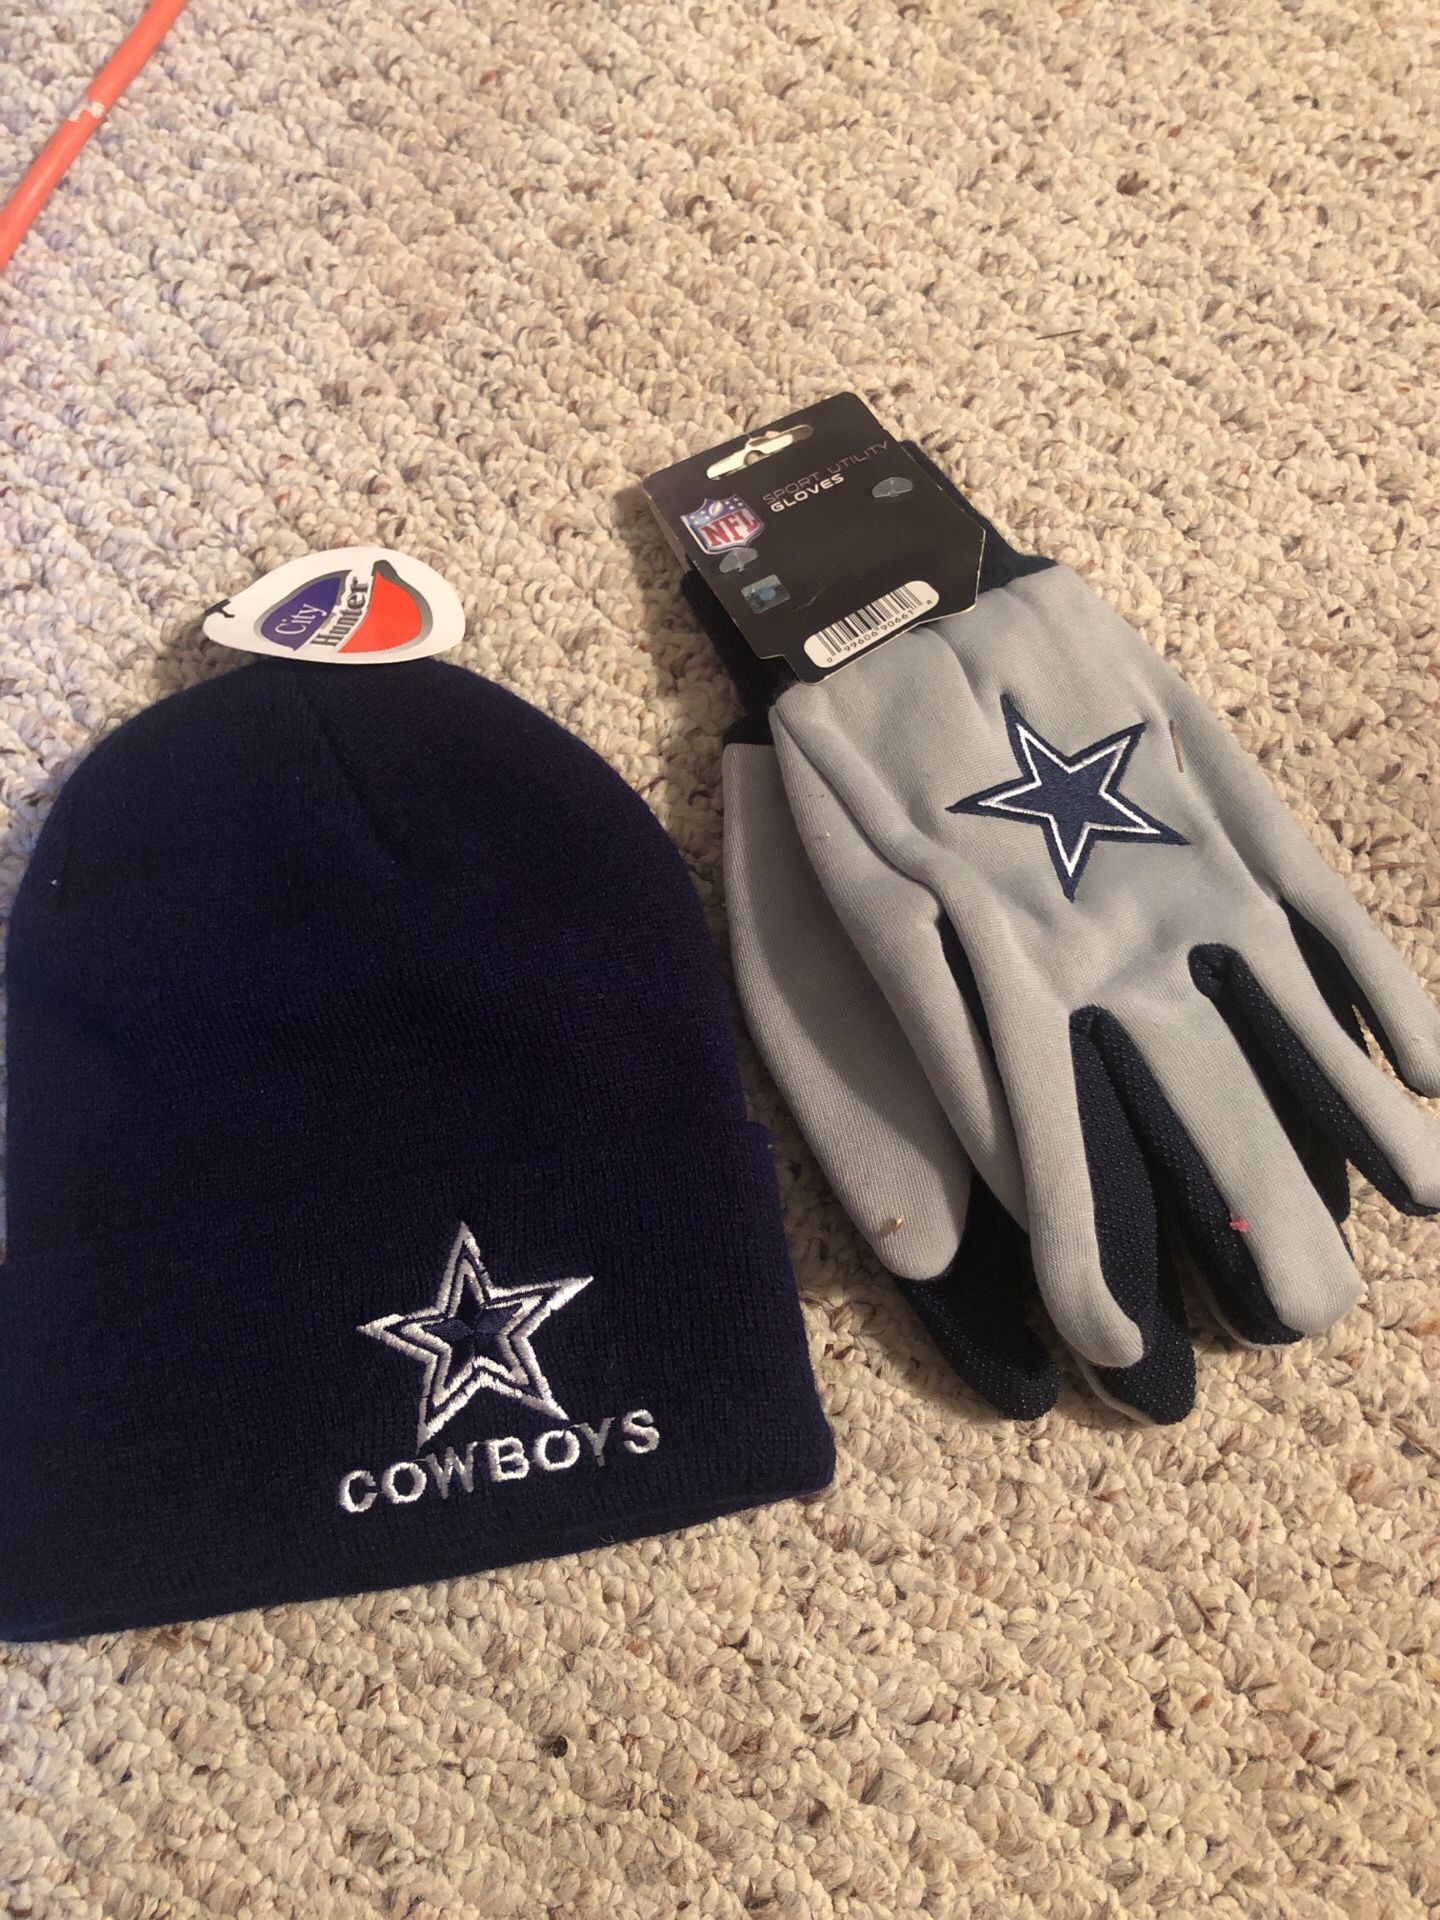 Dallas Cowboys gift set